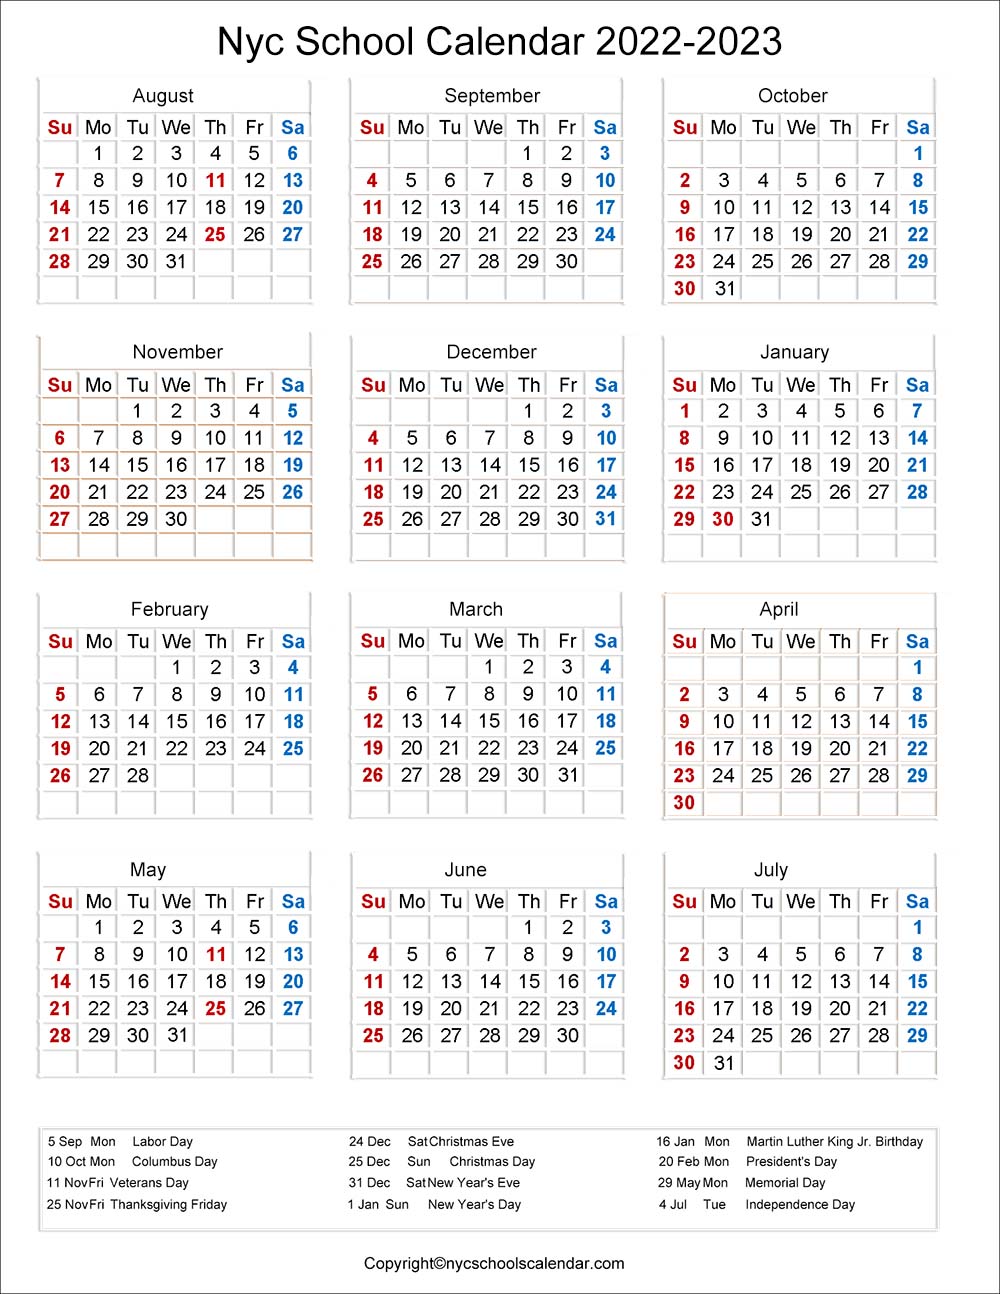 NYC DOE Calendar 2022